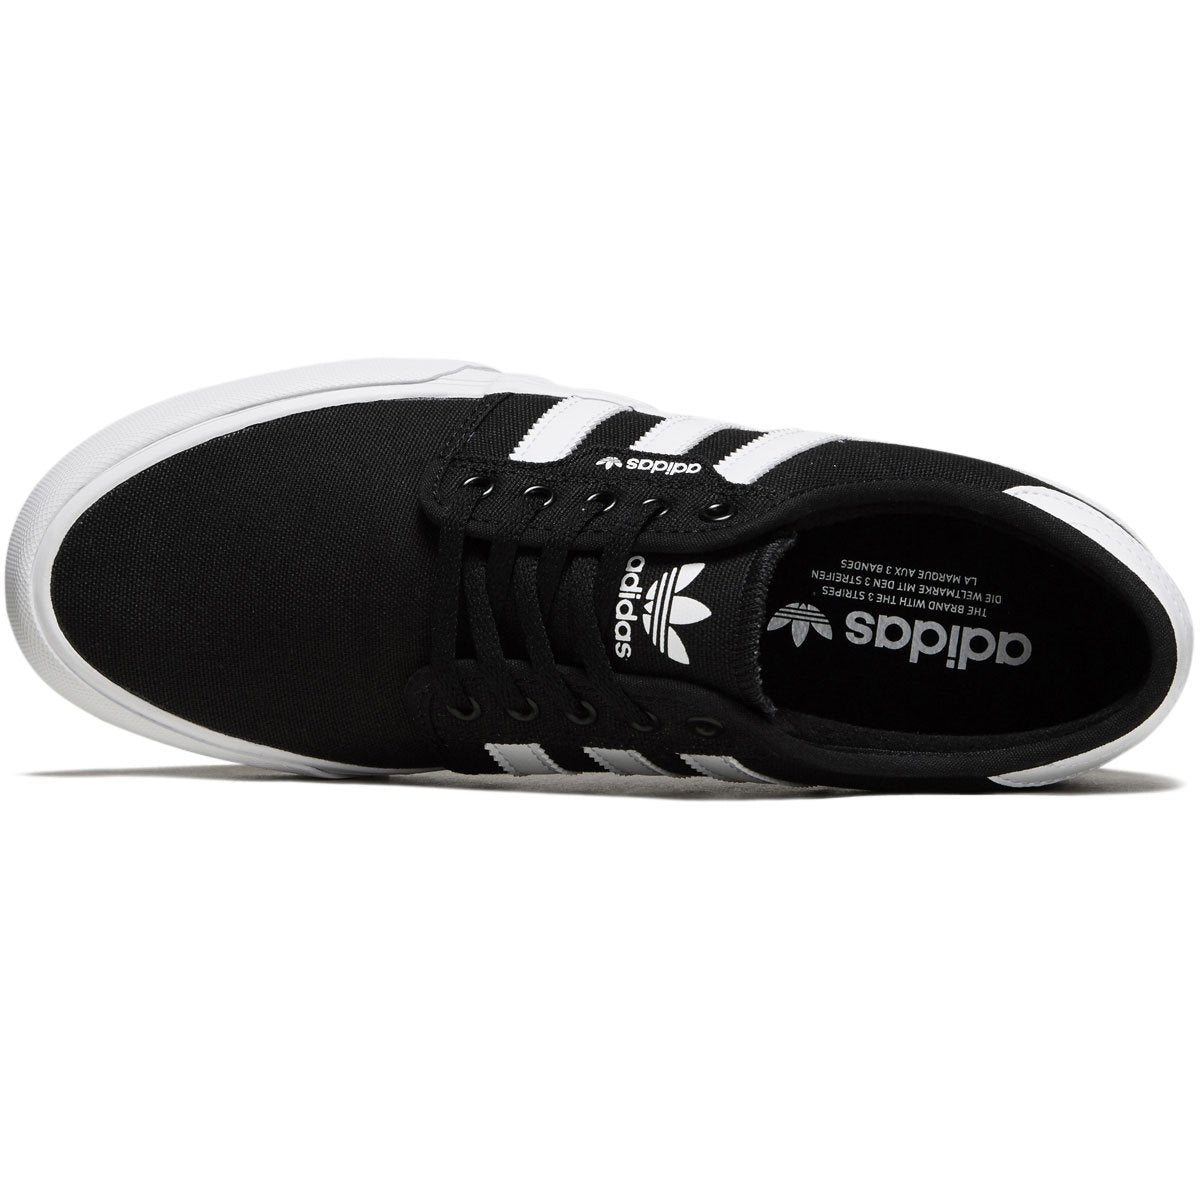 Seeley Xt - Shoes Daddies Core Adidas – Black/White/White Board Shop